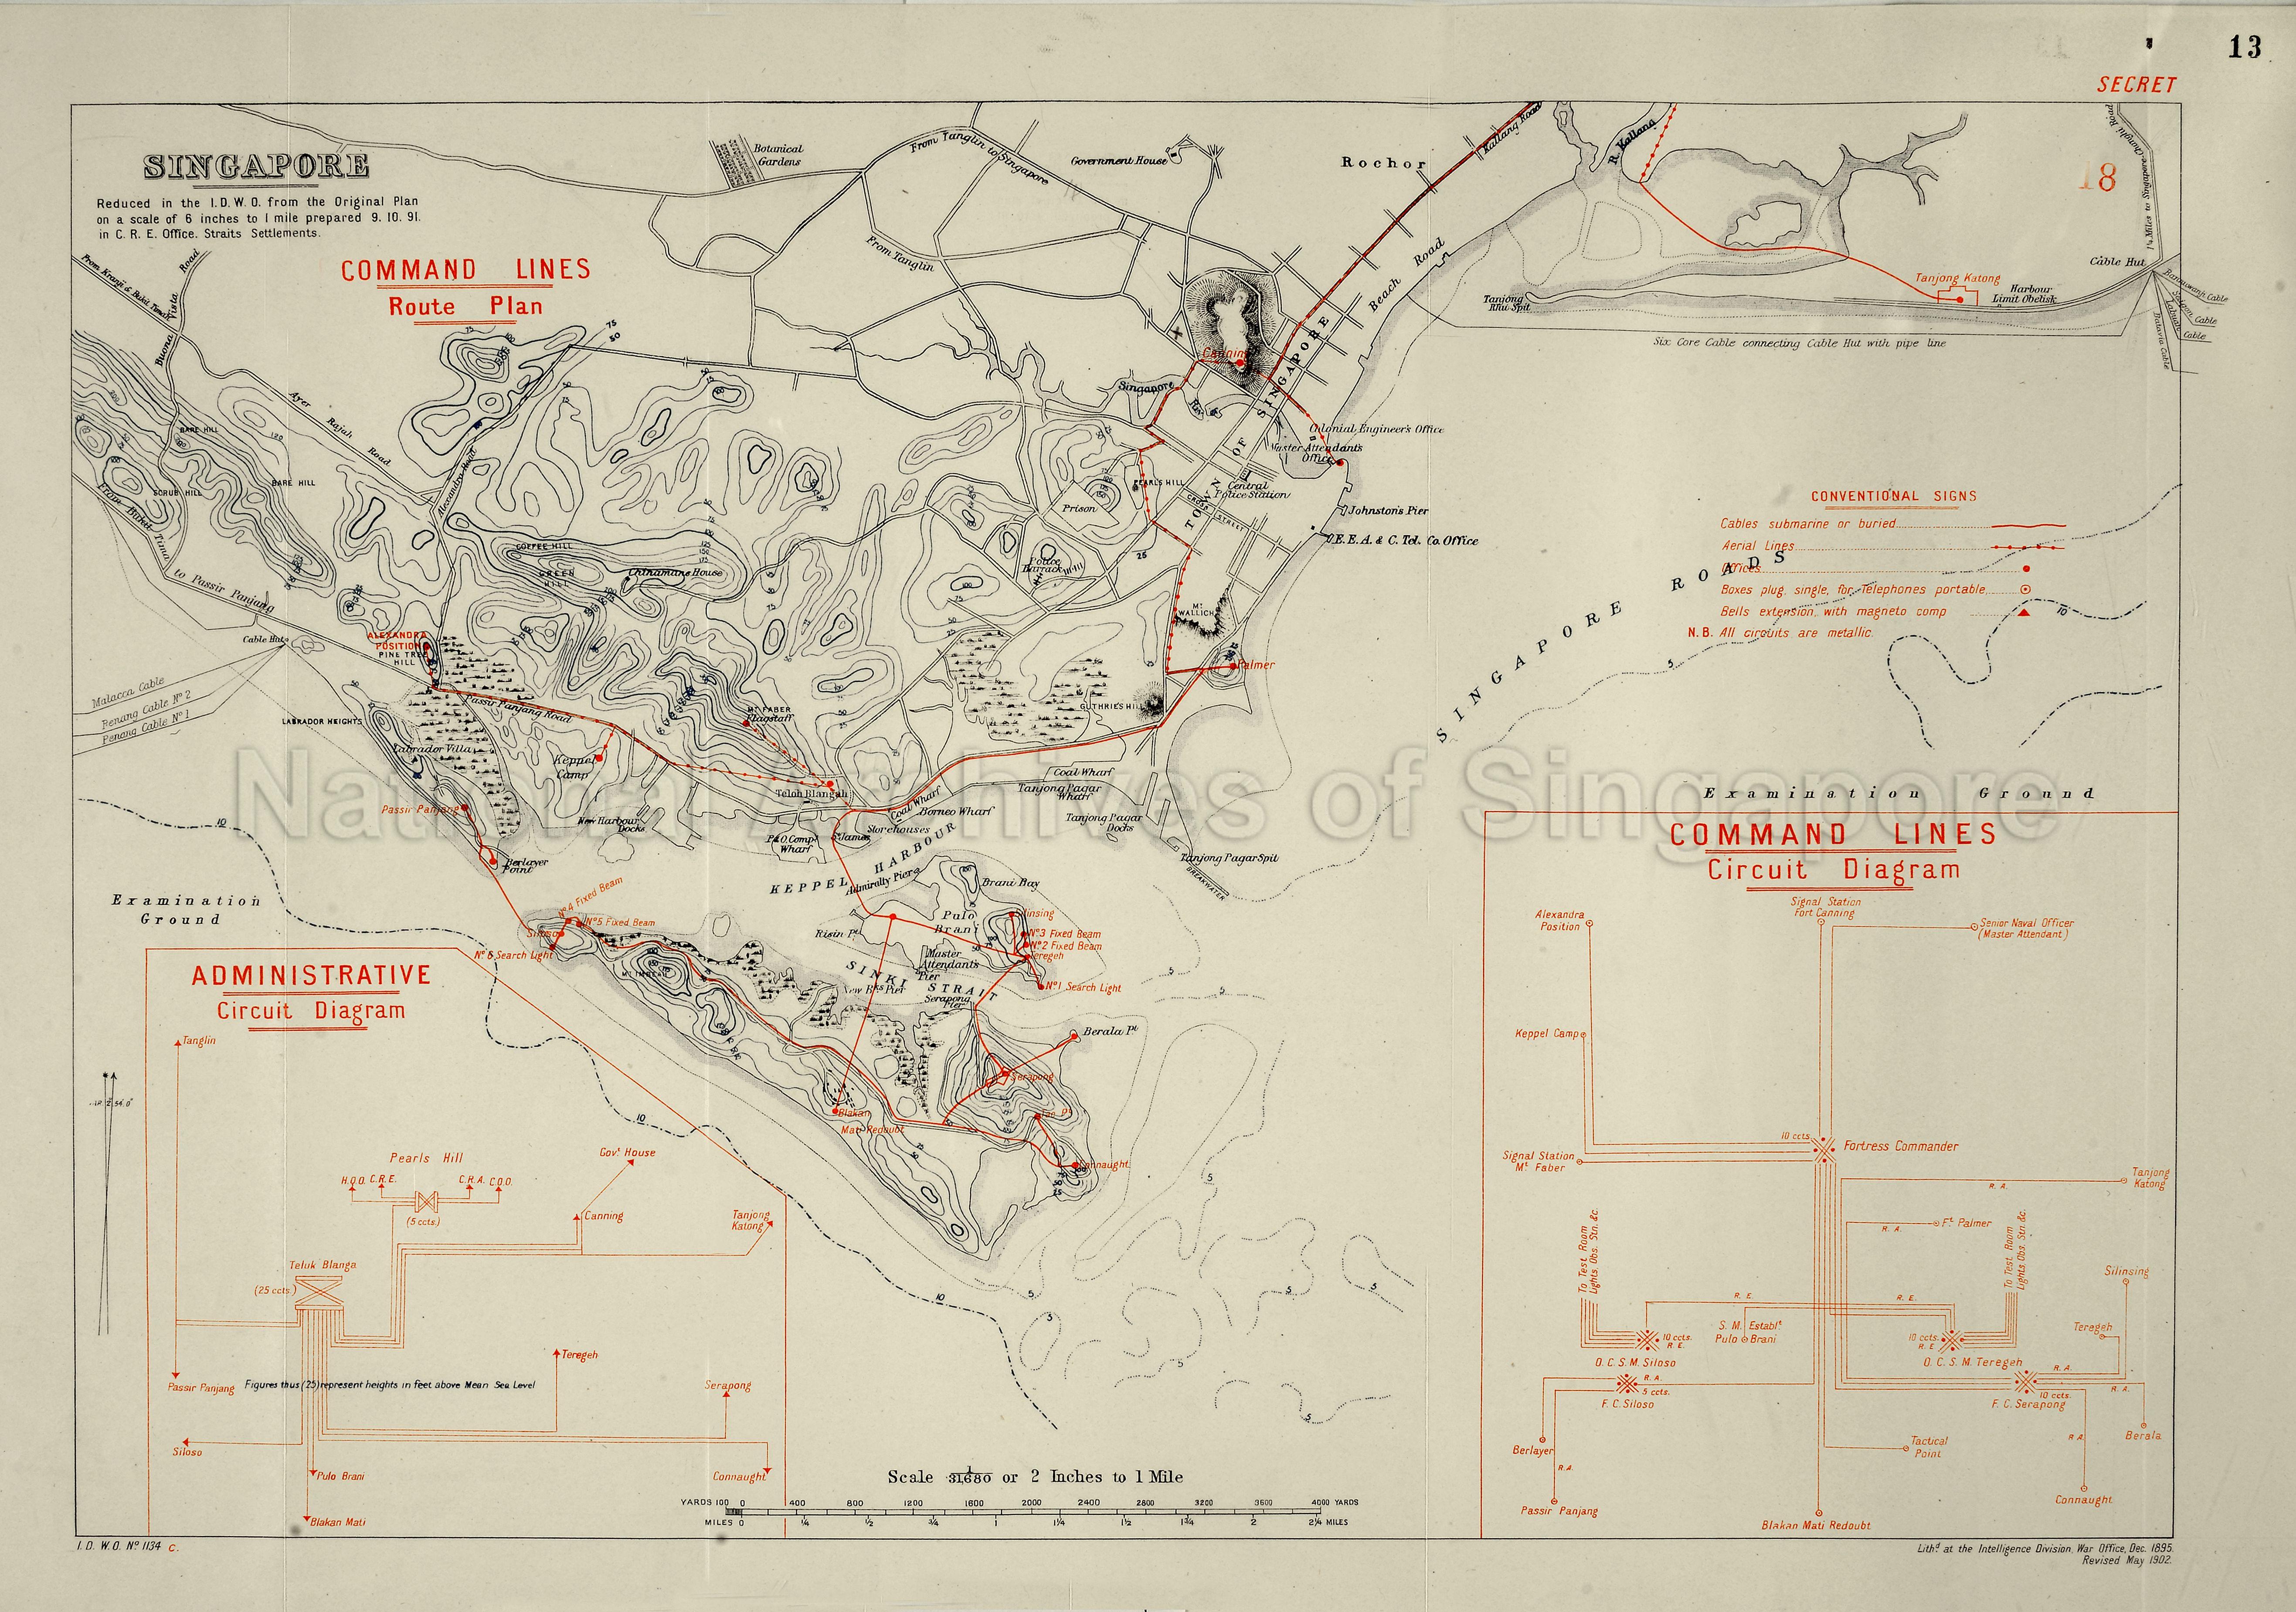 Singapore: Command Lines Route Plan, 1902